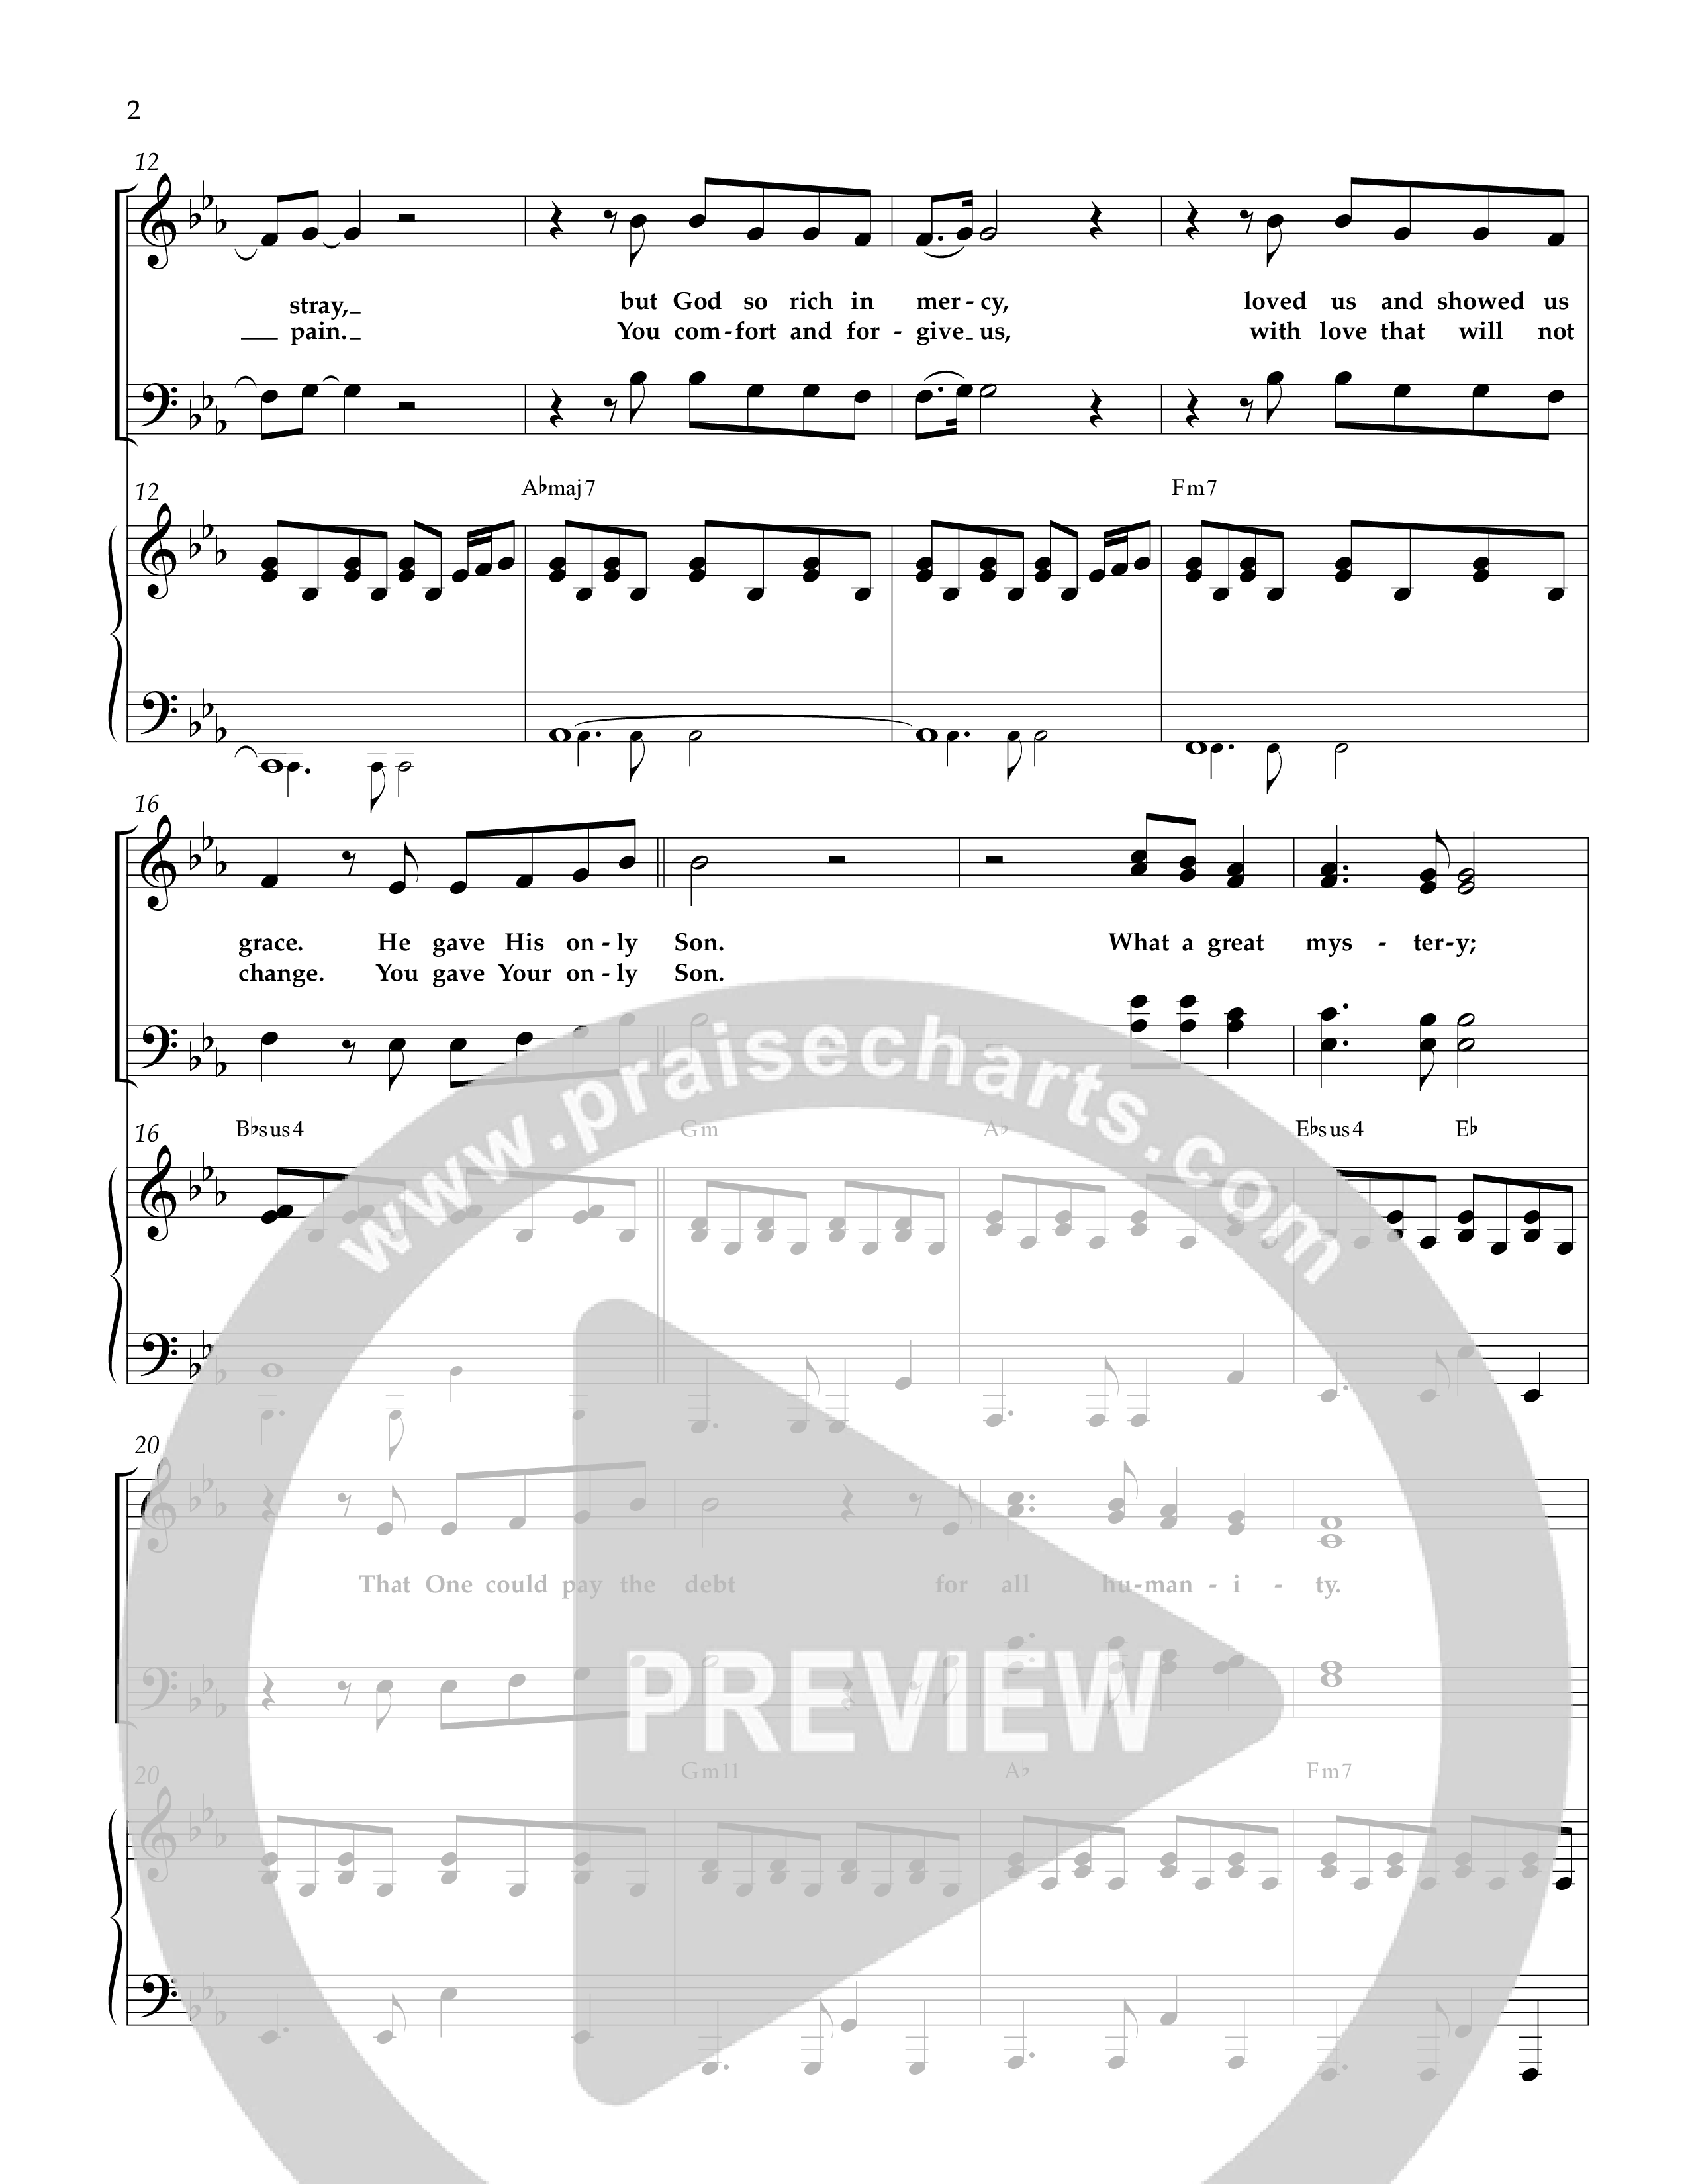 Jesus Hope Of The World (Choral Anthem SATB) Anthem (SATB/Piano) (Lifeway Choral / Arr. Mark Willard / Orch. Stephen K. Hand / Orch. Phillip Keveren)